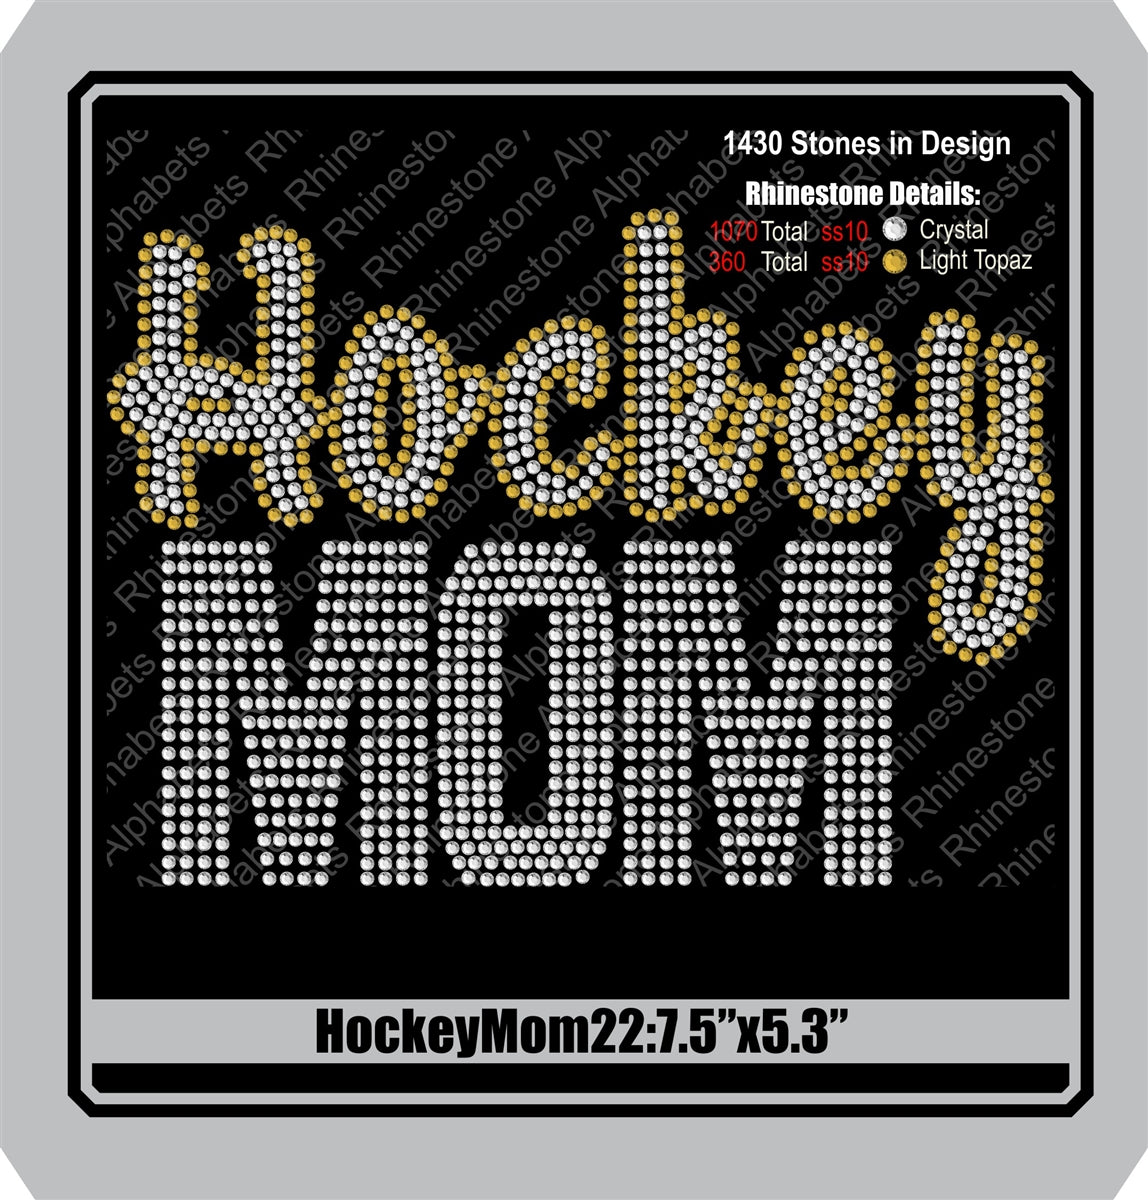 Hockey Mom 22 ,TTF Rhinestone Fonts & Rhinestone Designs